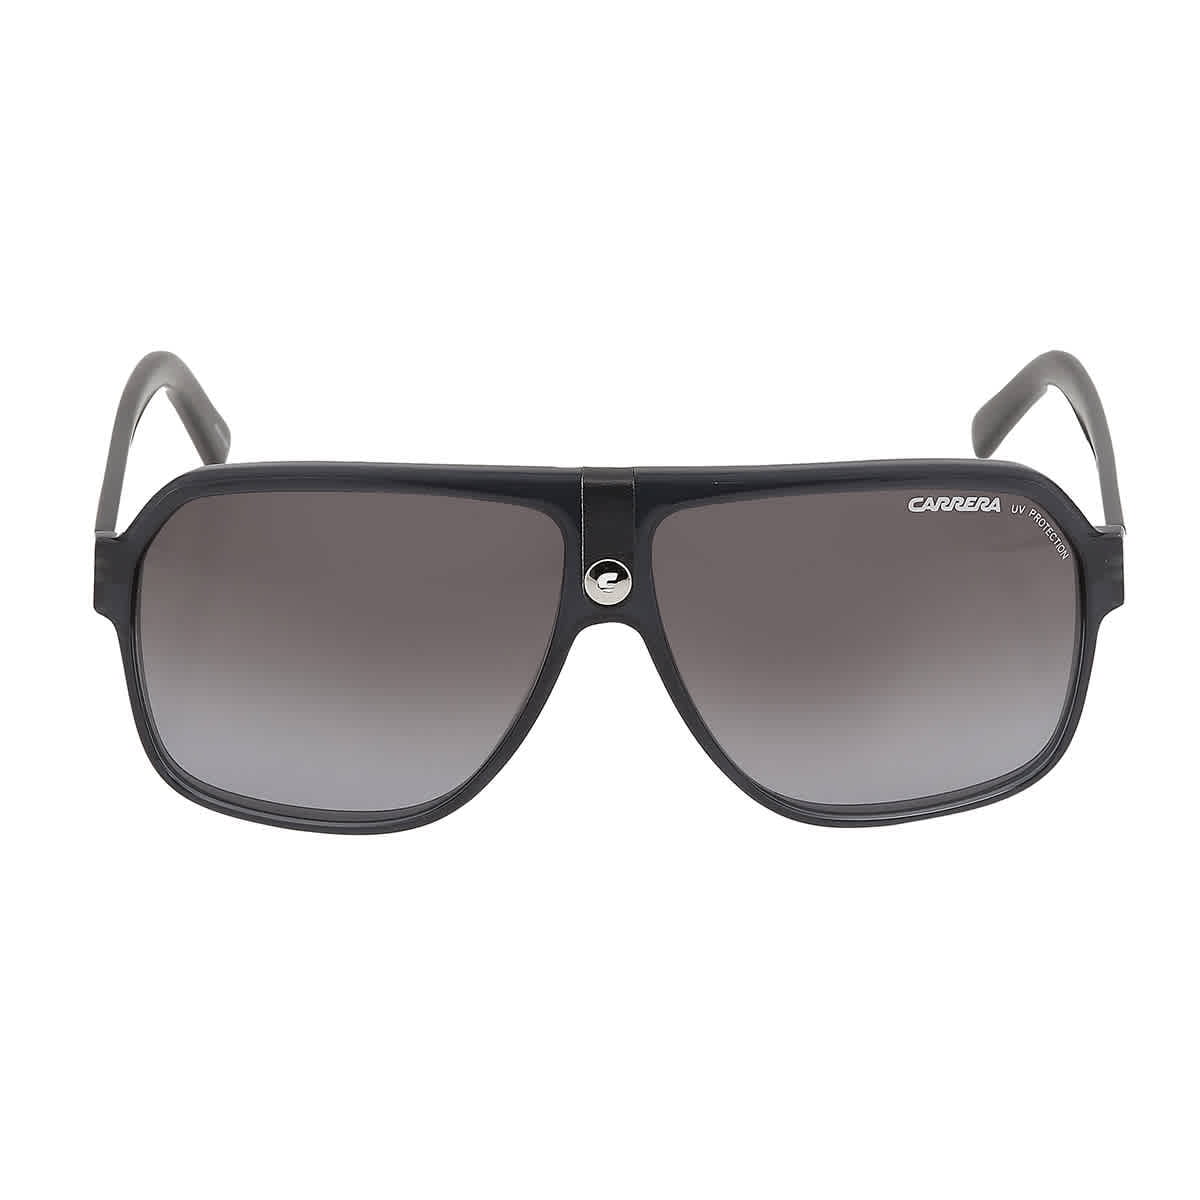 Robusto Criatura Excluir Carrera Grey Square Men's Sunglasses CARRERA 33/S 0R6S/9O 62 - Walmart.com